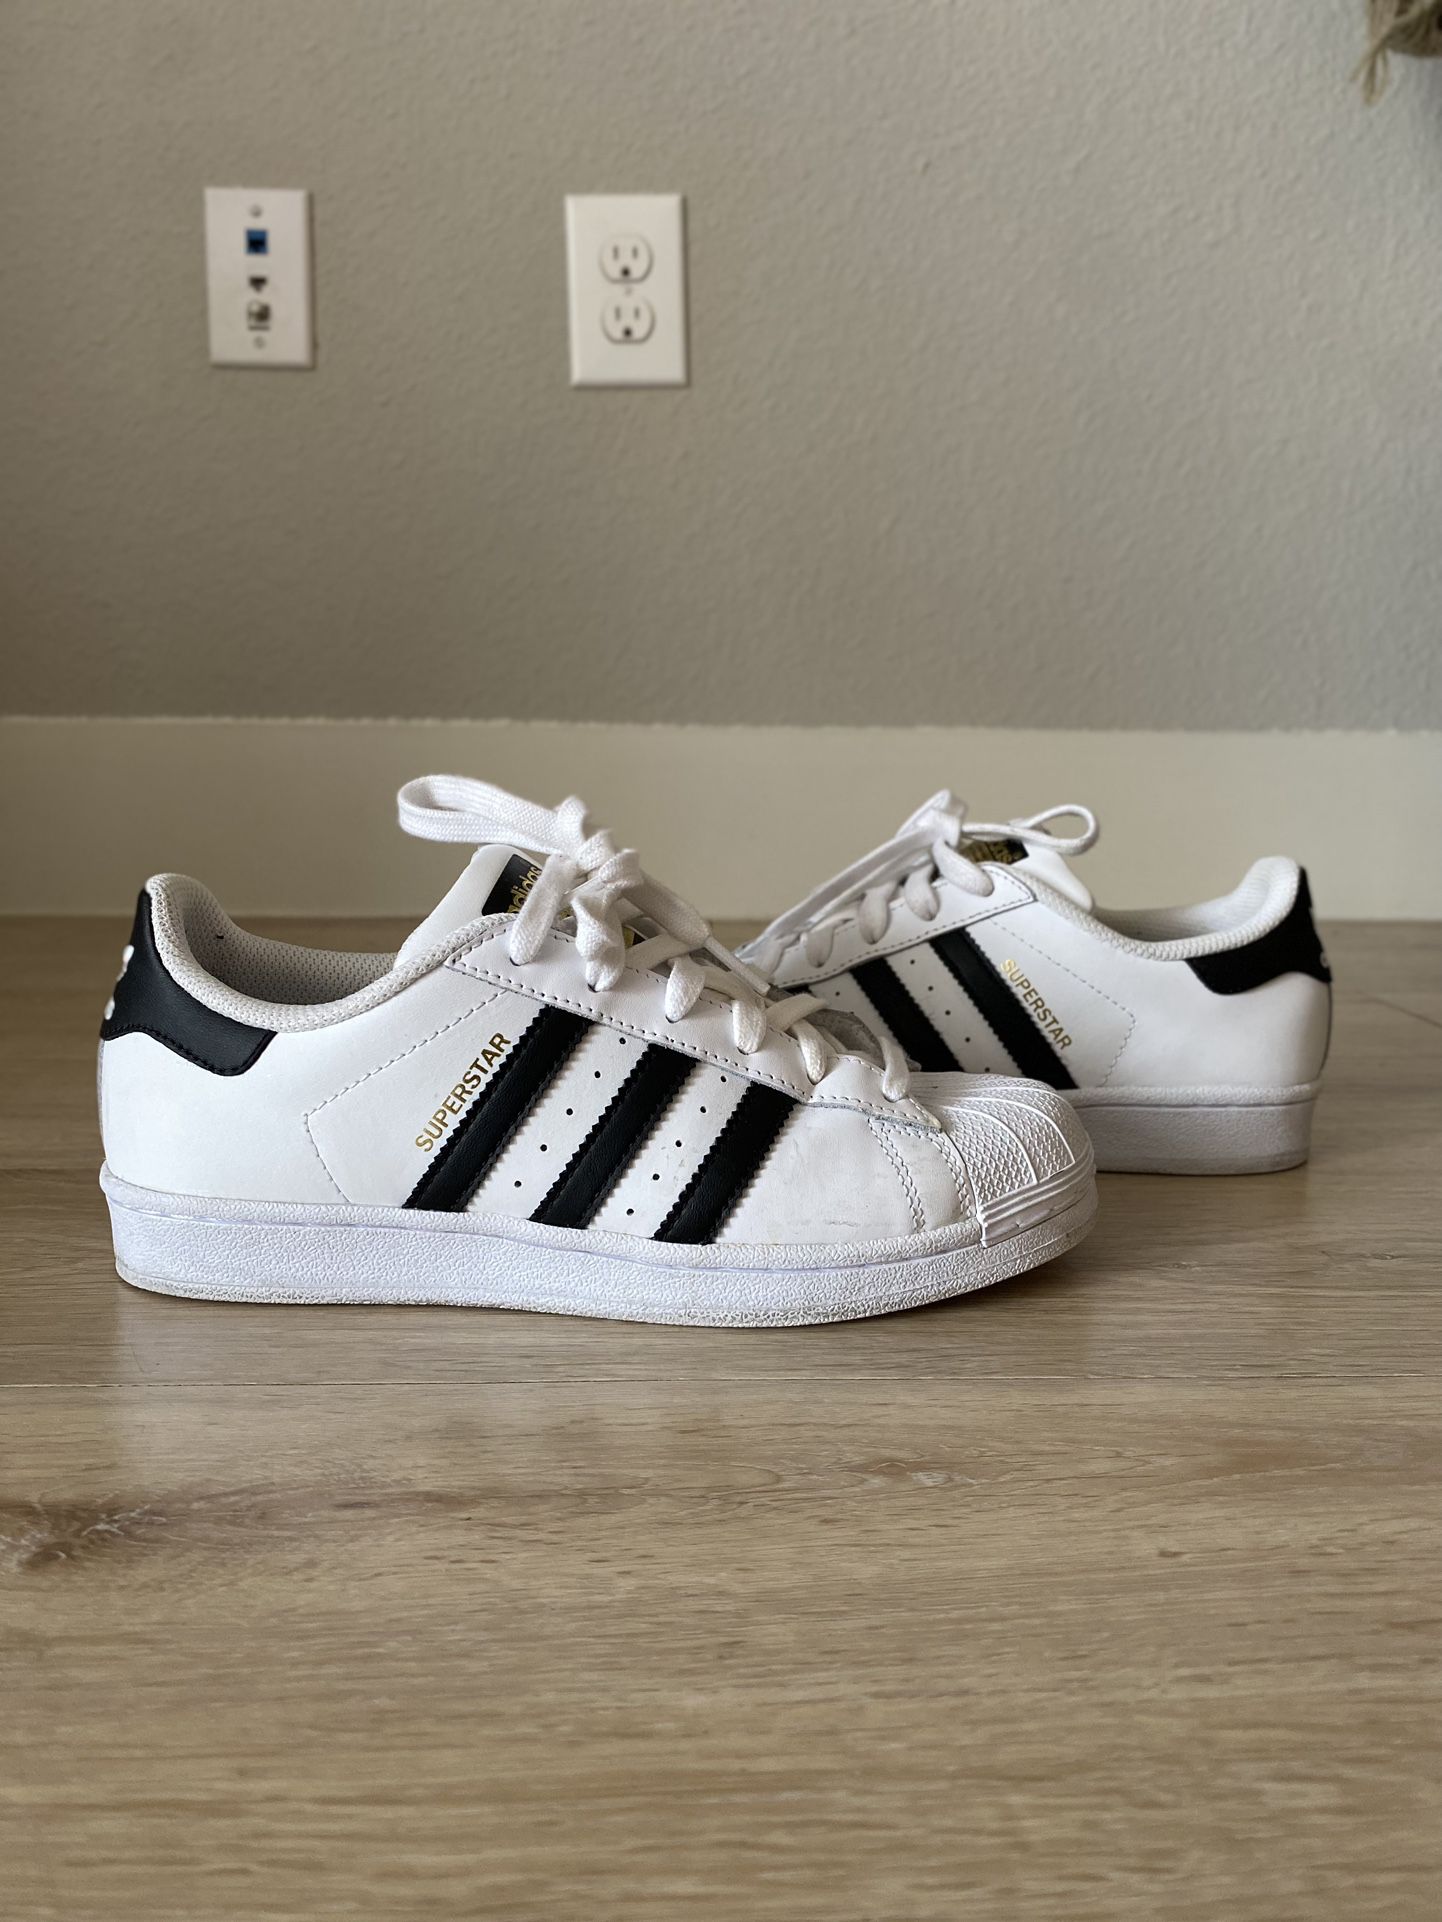 plek Voorouder Compliment Adidas Superstar Kids 4.5 for Sale in San Antonio, TX - OfferUp